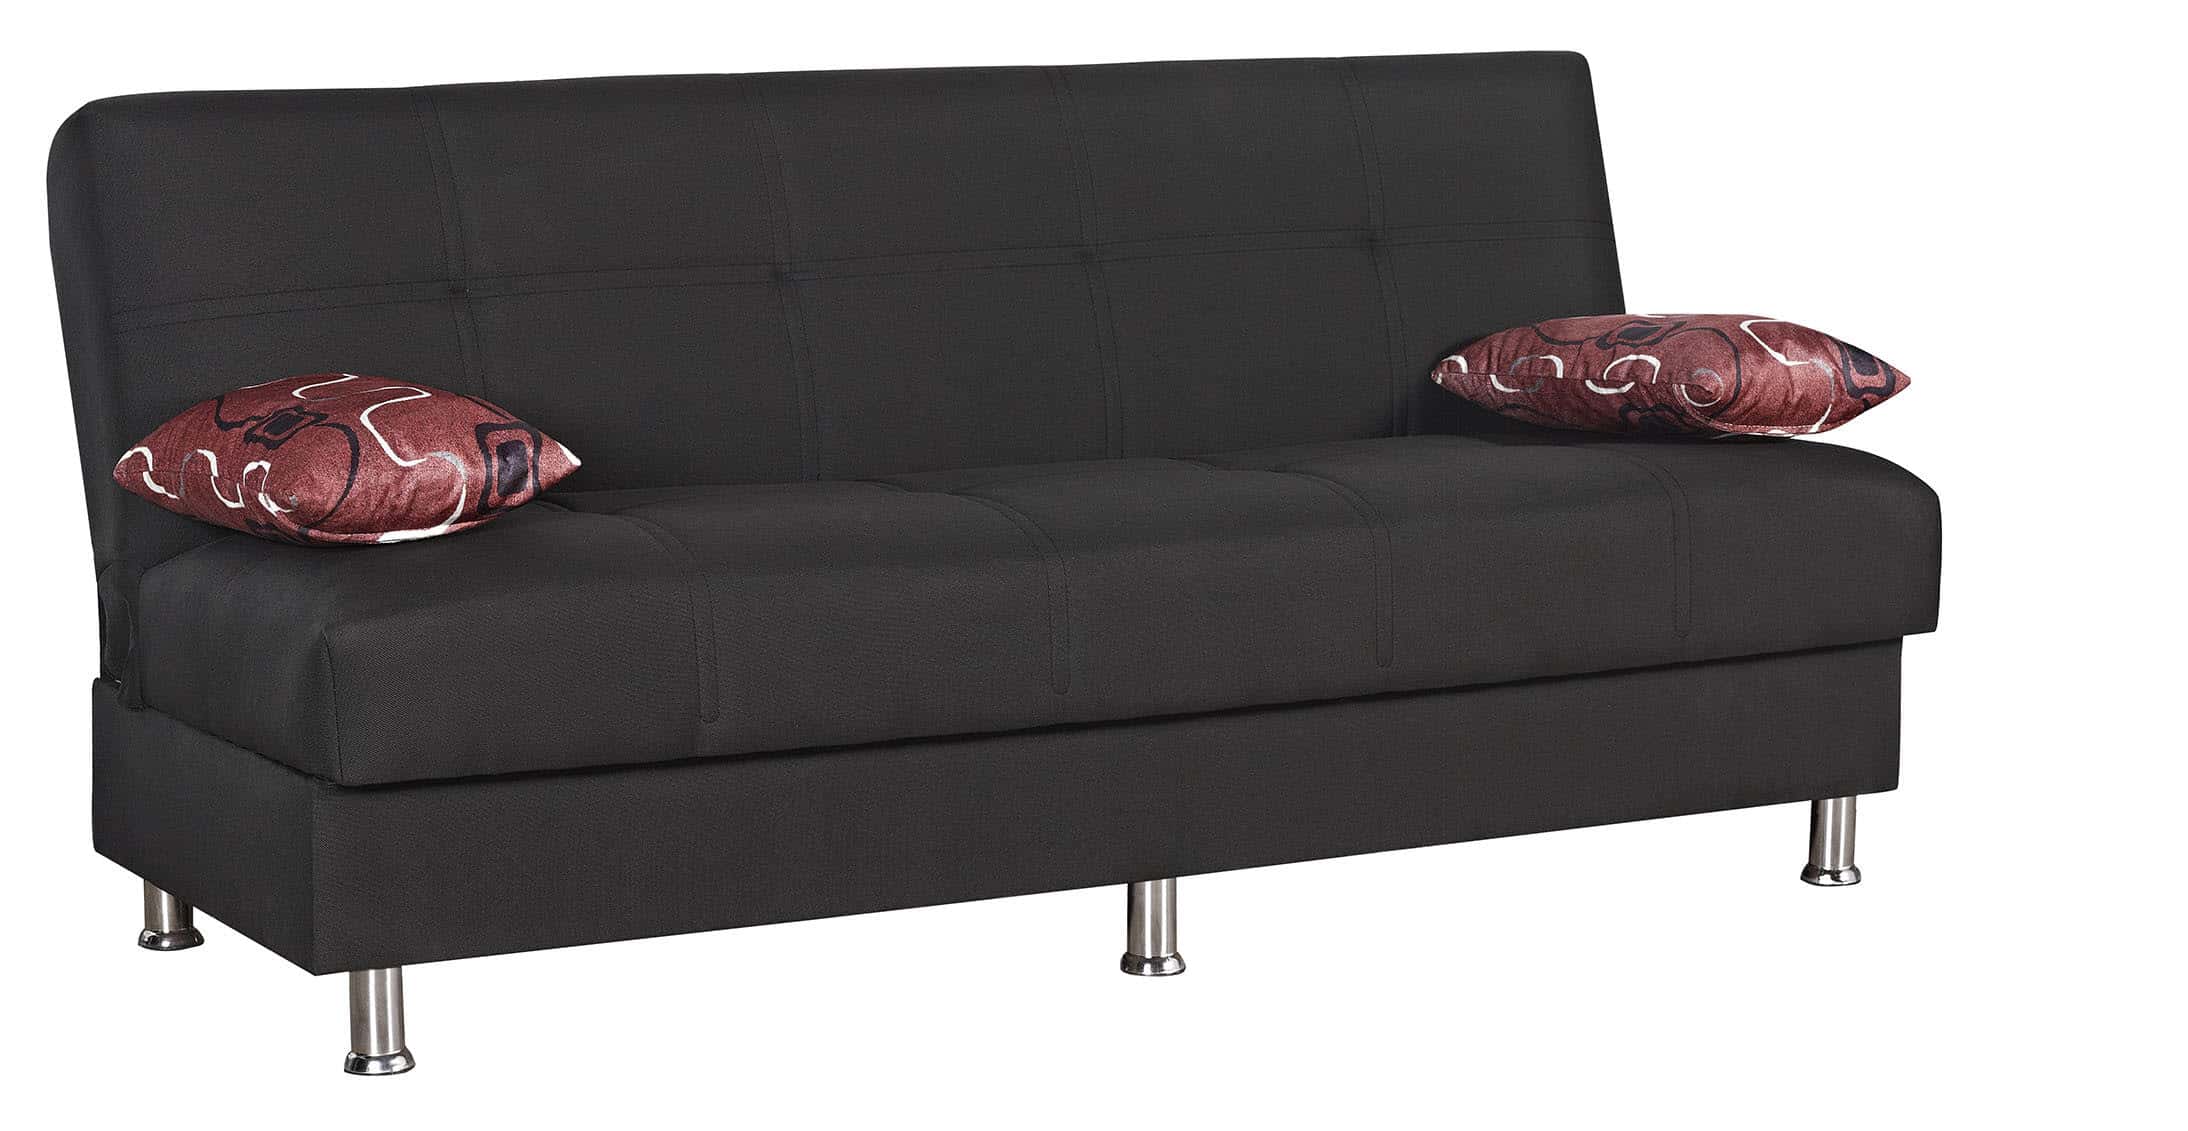 Amsterdam Black Sofa Bed by Empire Furniture USA